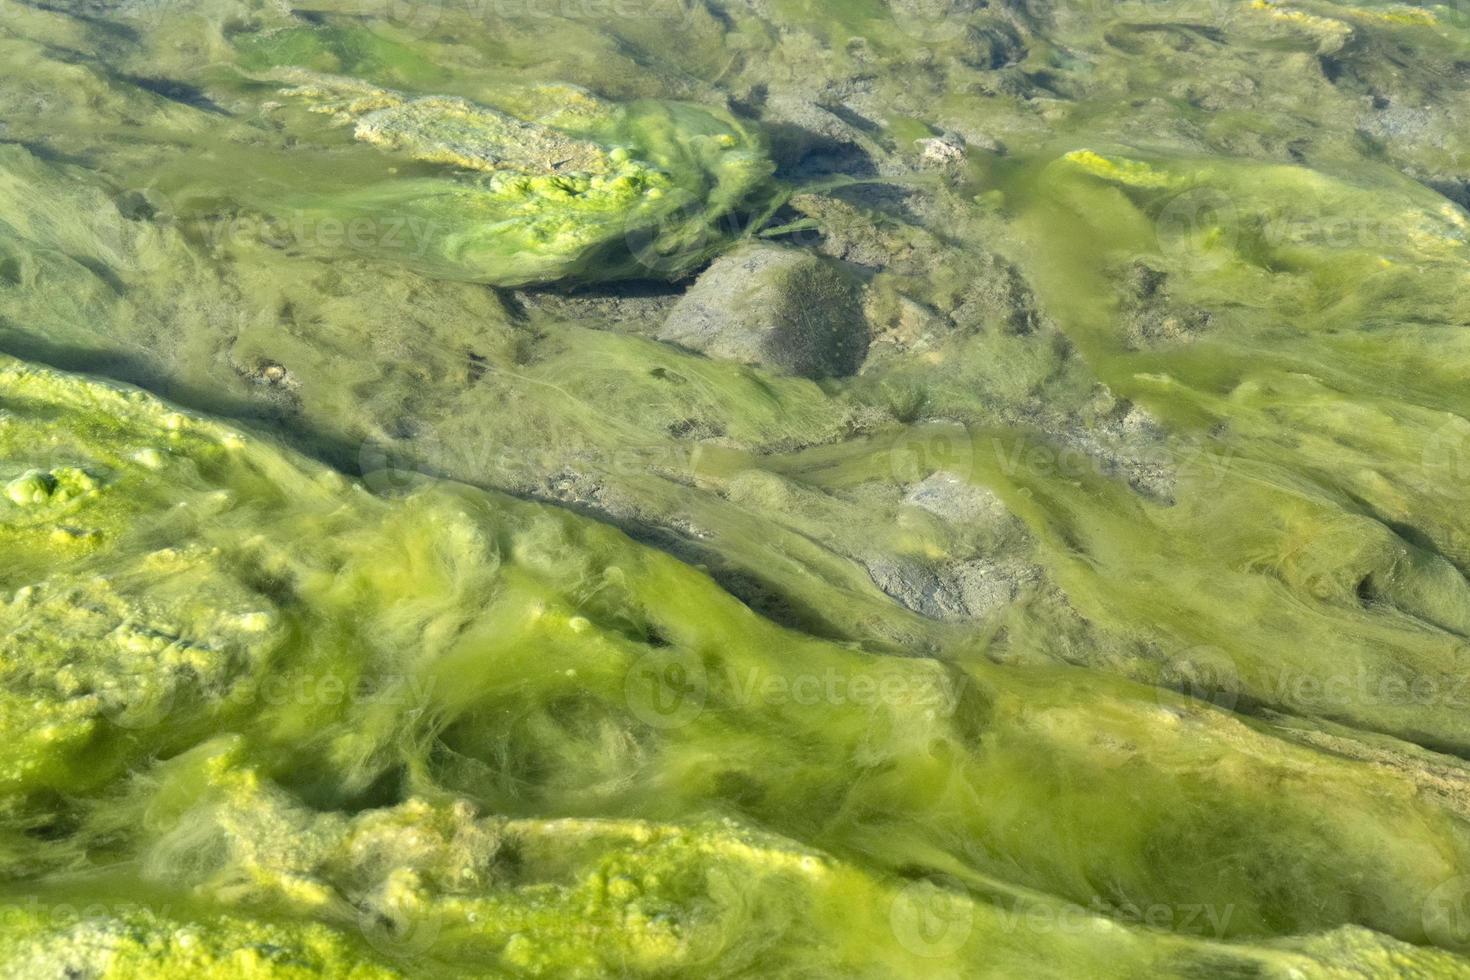 River green alga detail photo